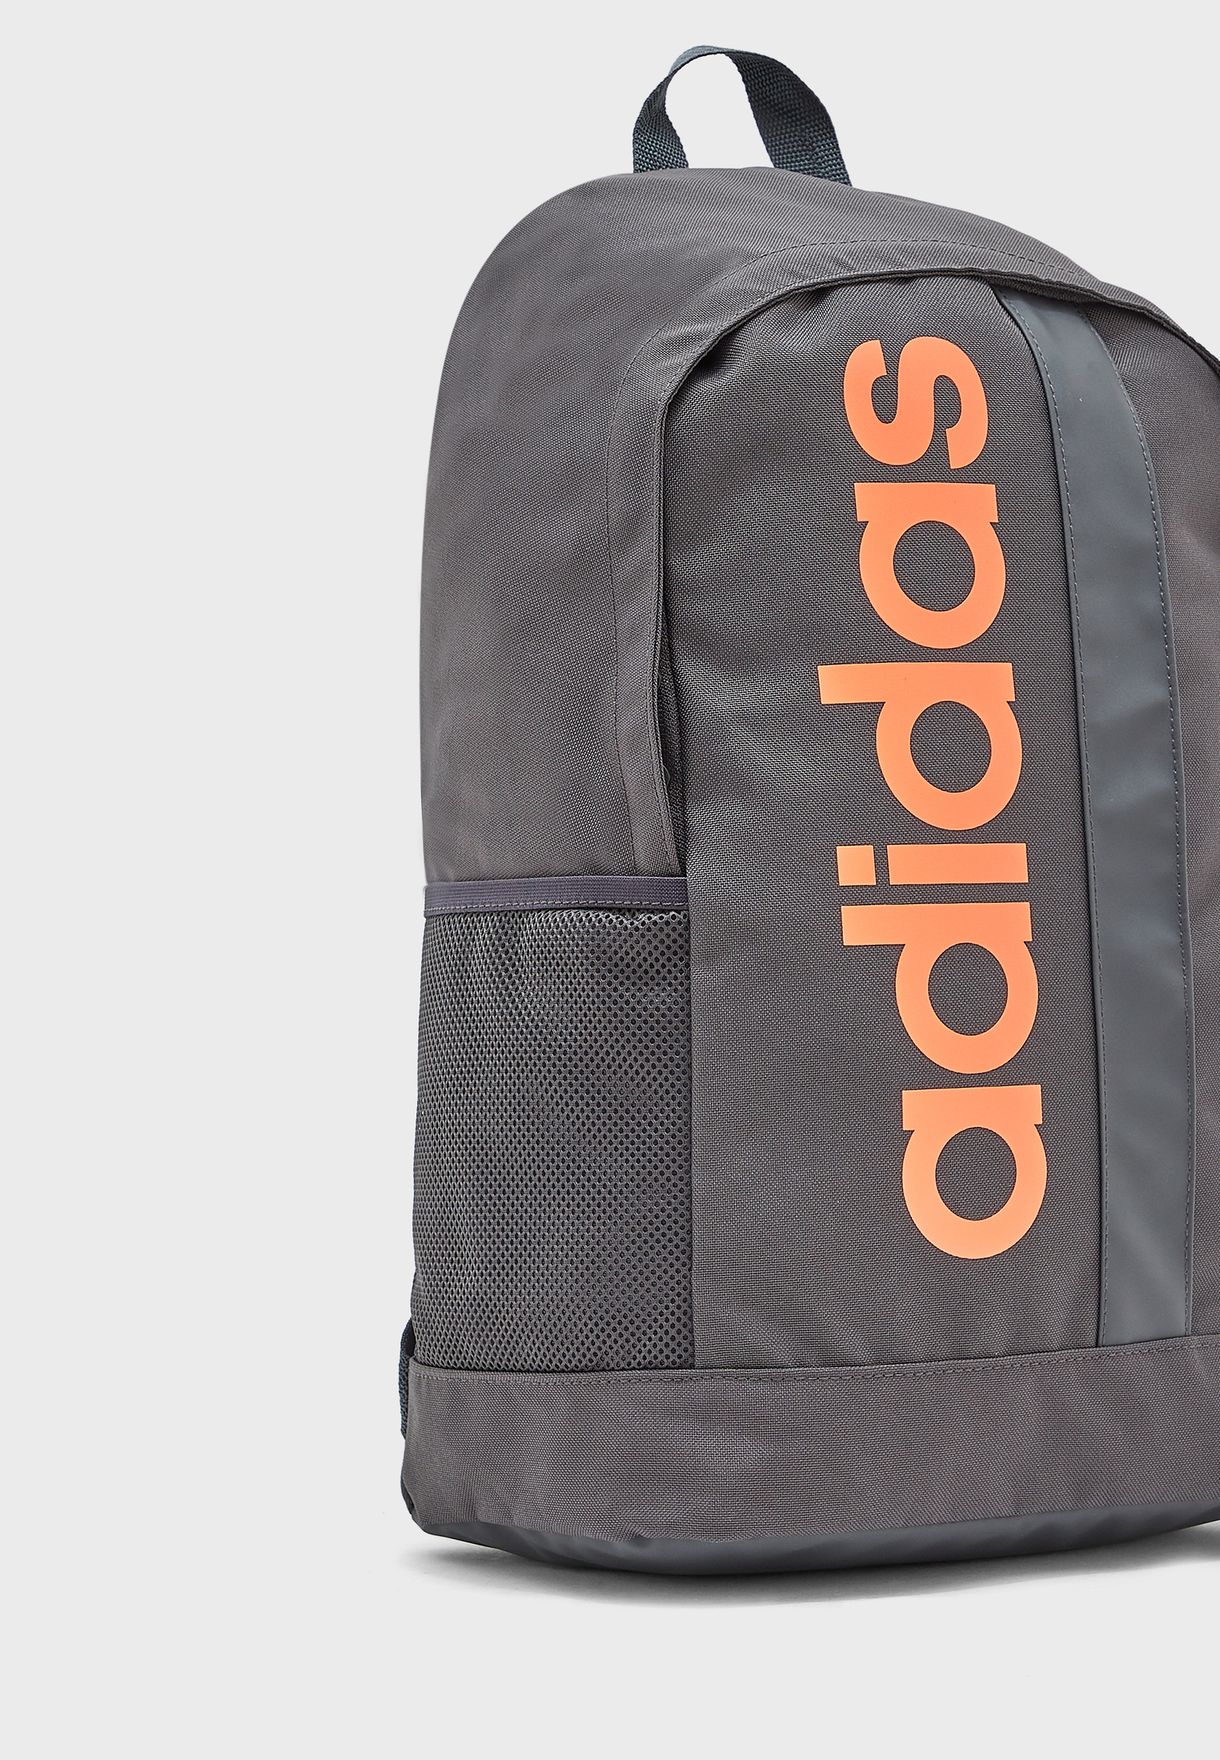 adidas backpack grey and pink